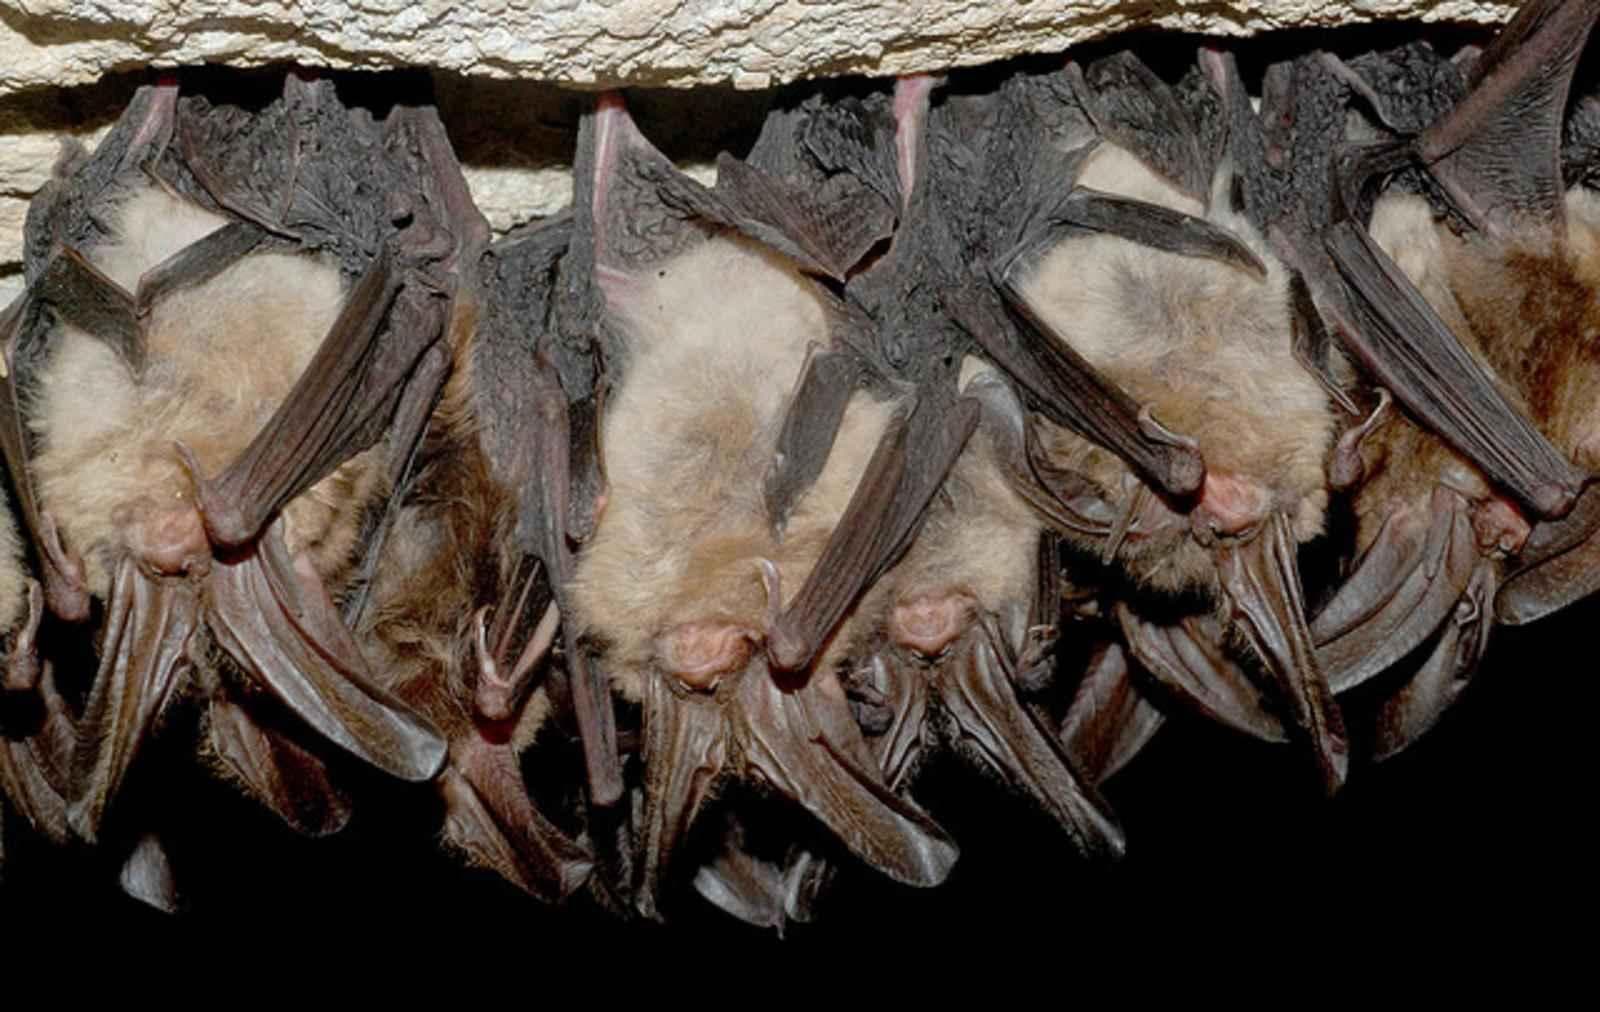 bats hibernate or migrate